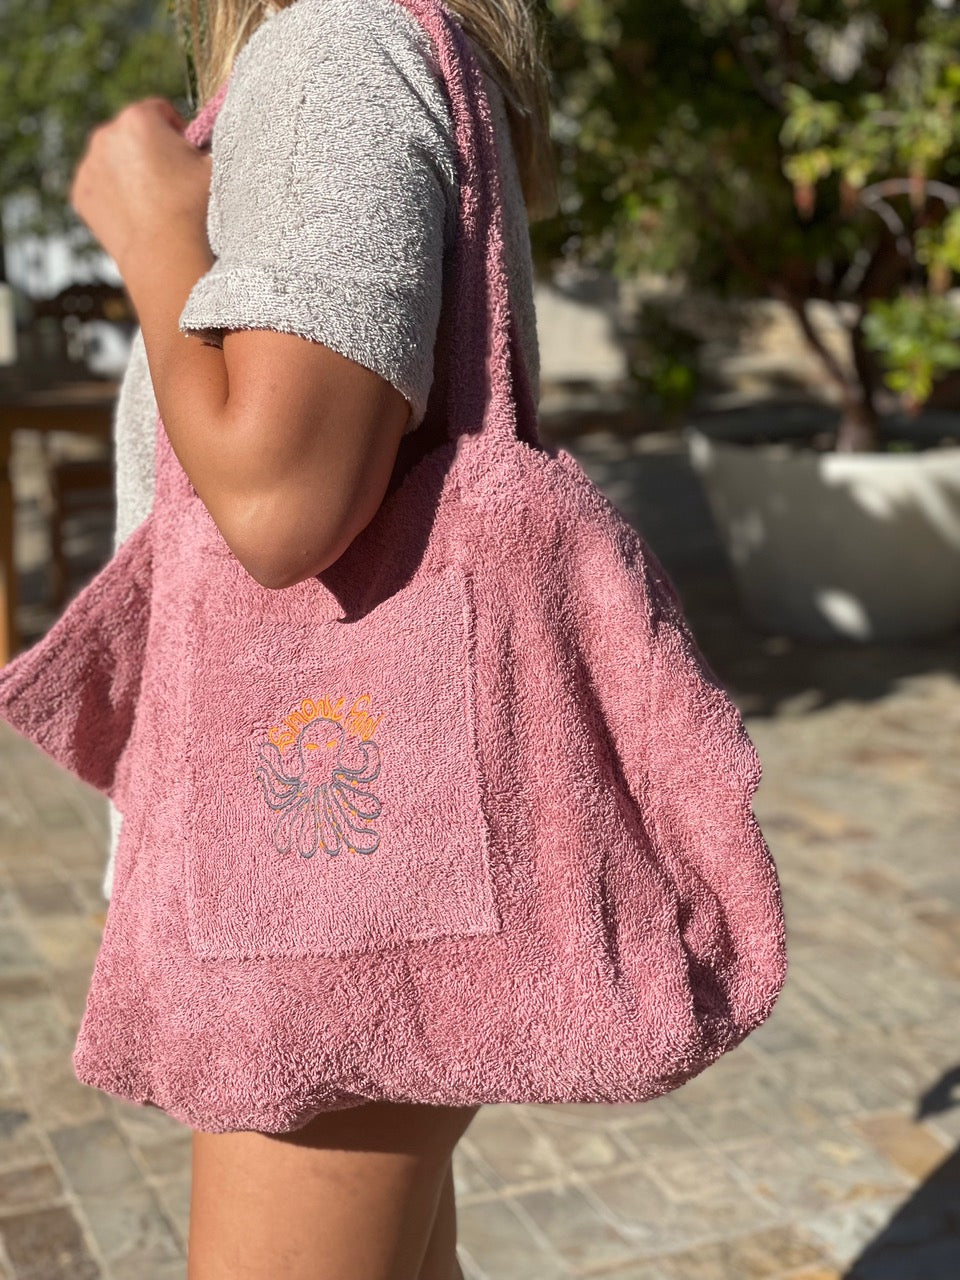 The Beach Bag – Simone Fan Store